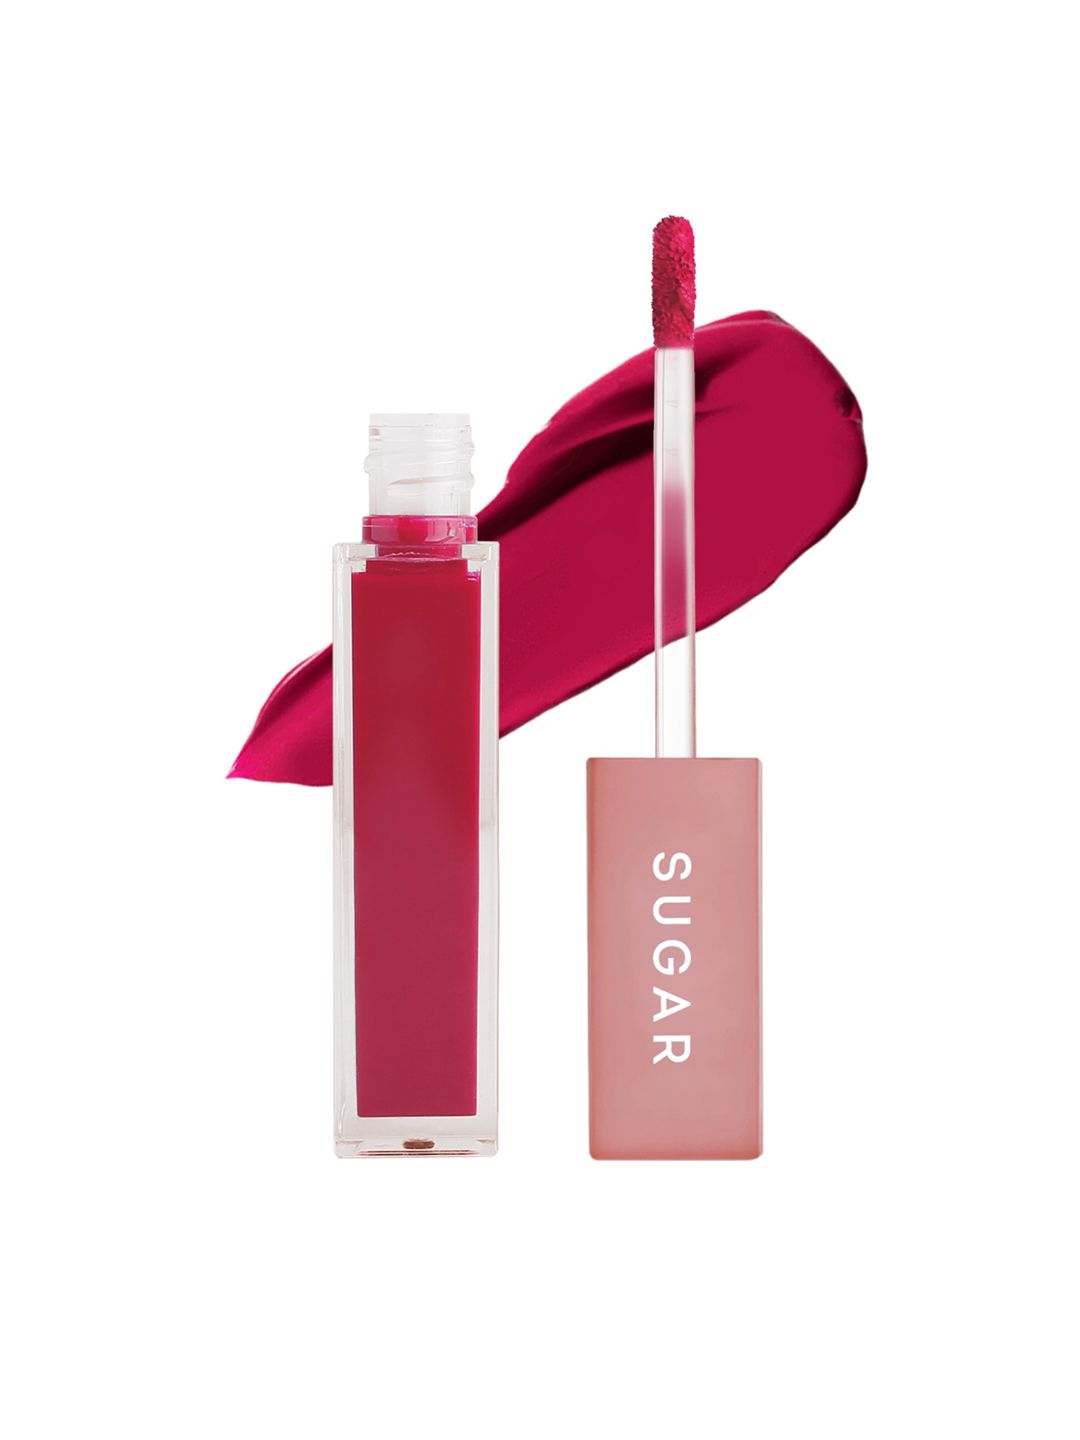 SUGAR Mettle Liquid Lipstick - Talitha Price in India